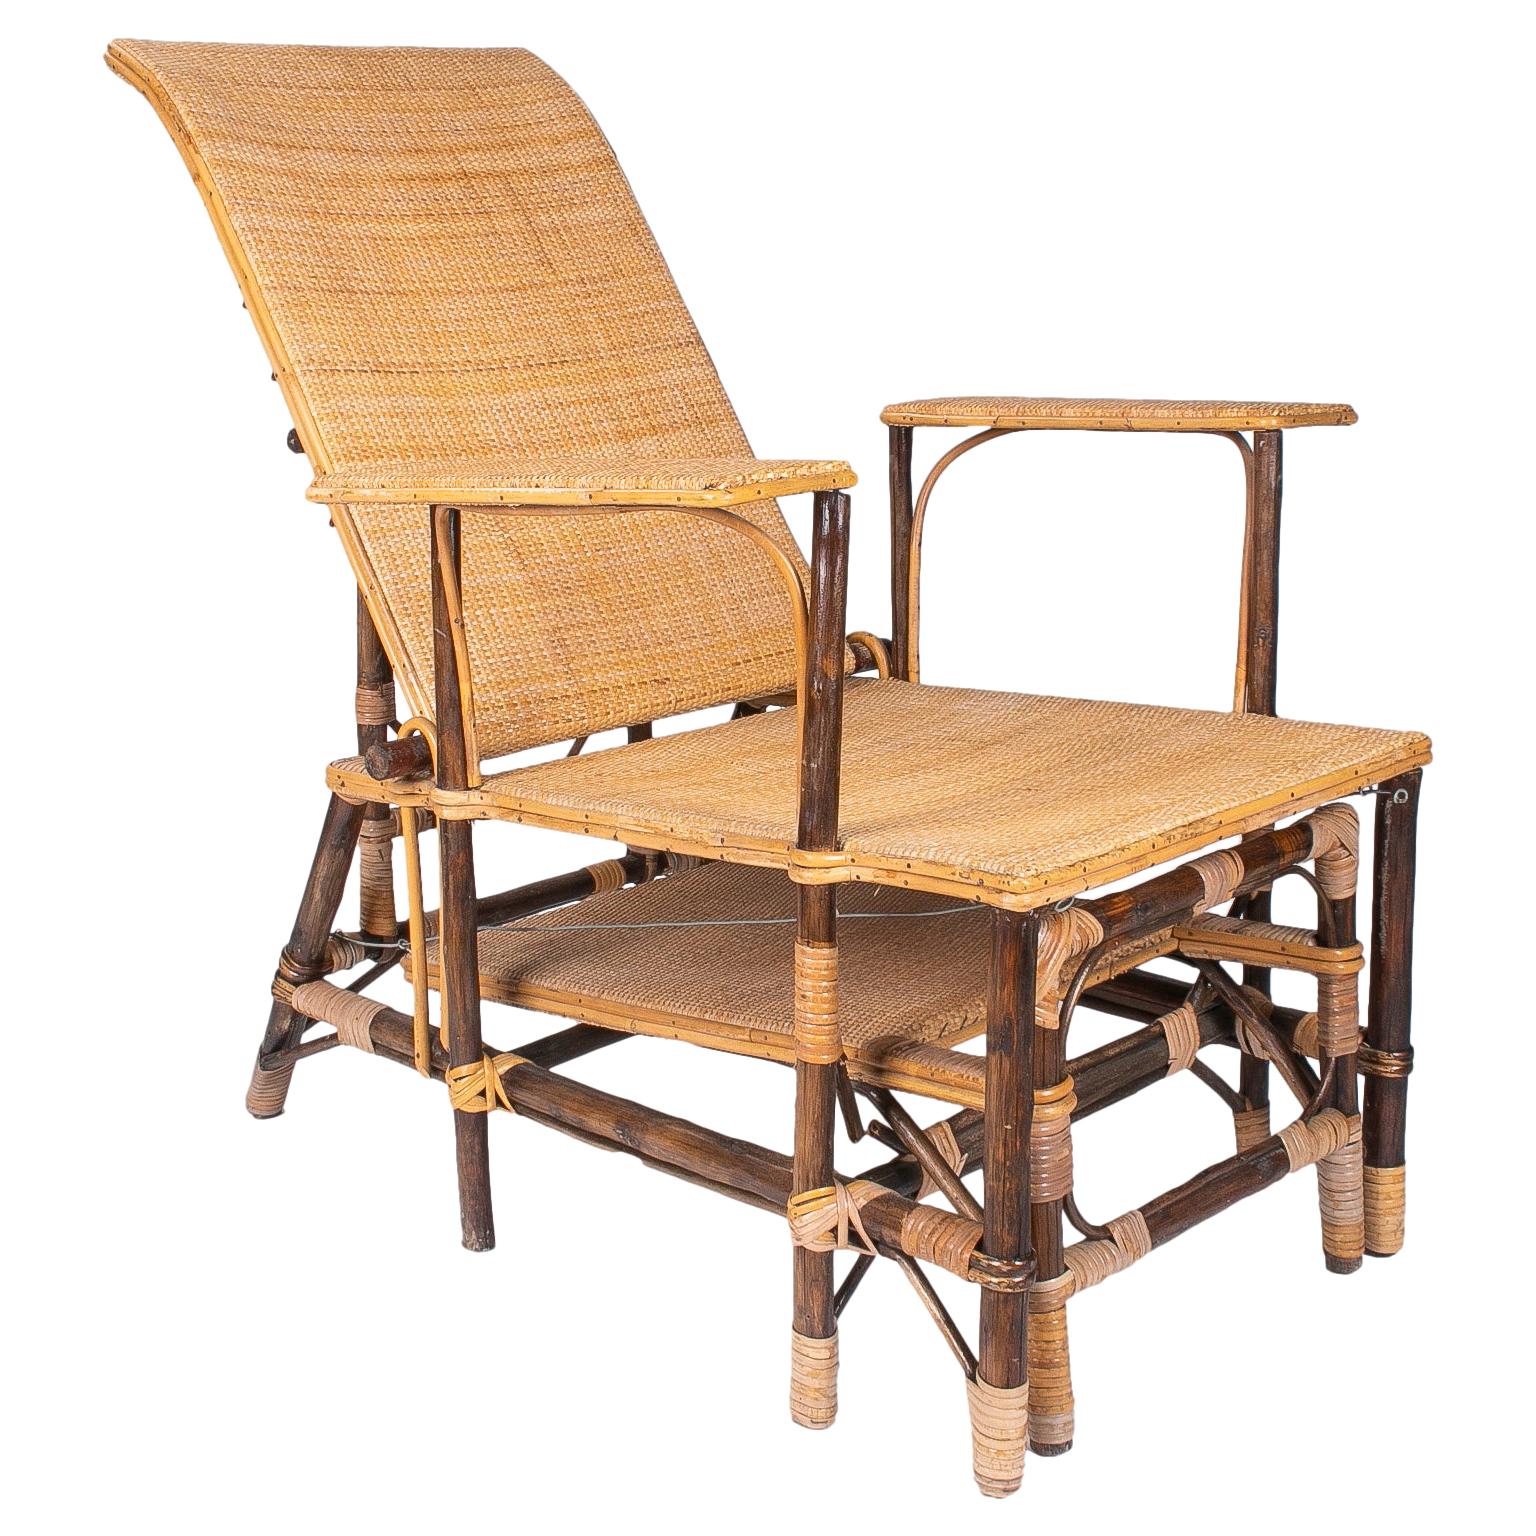 1980s Spanish Woven Wicker & Bamboo Sunbathing Lounge Chair